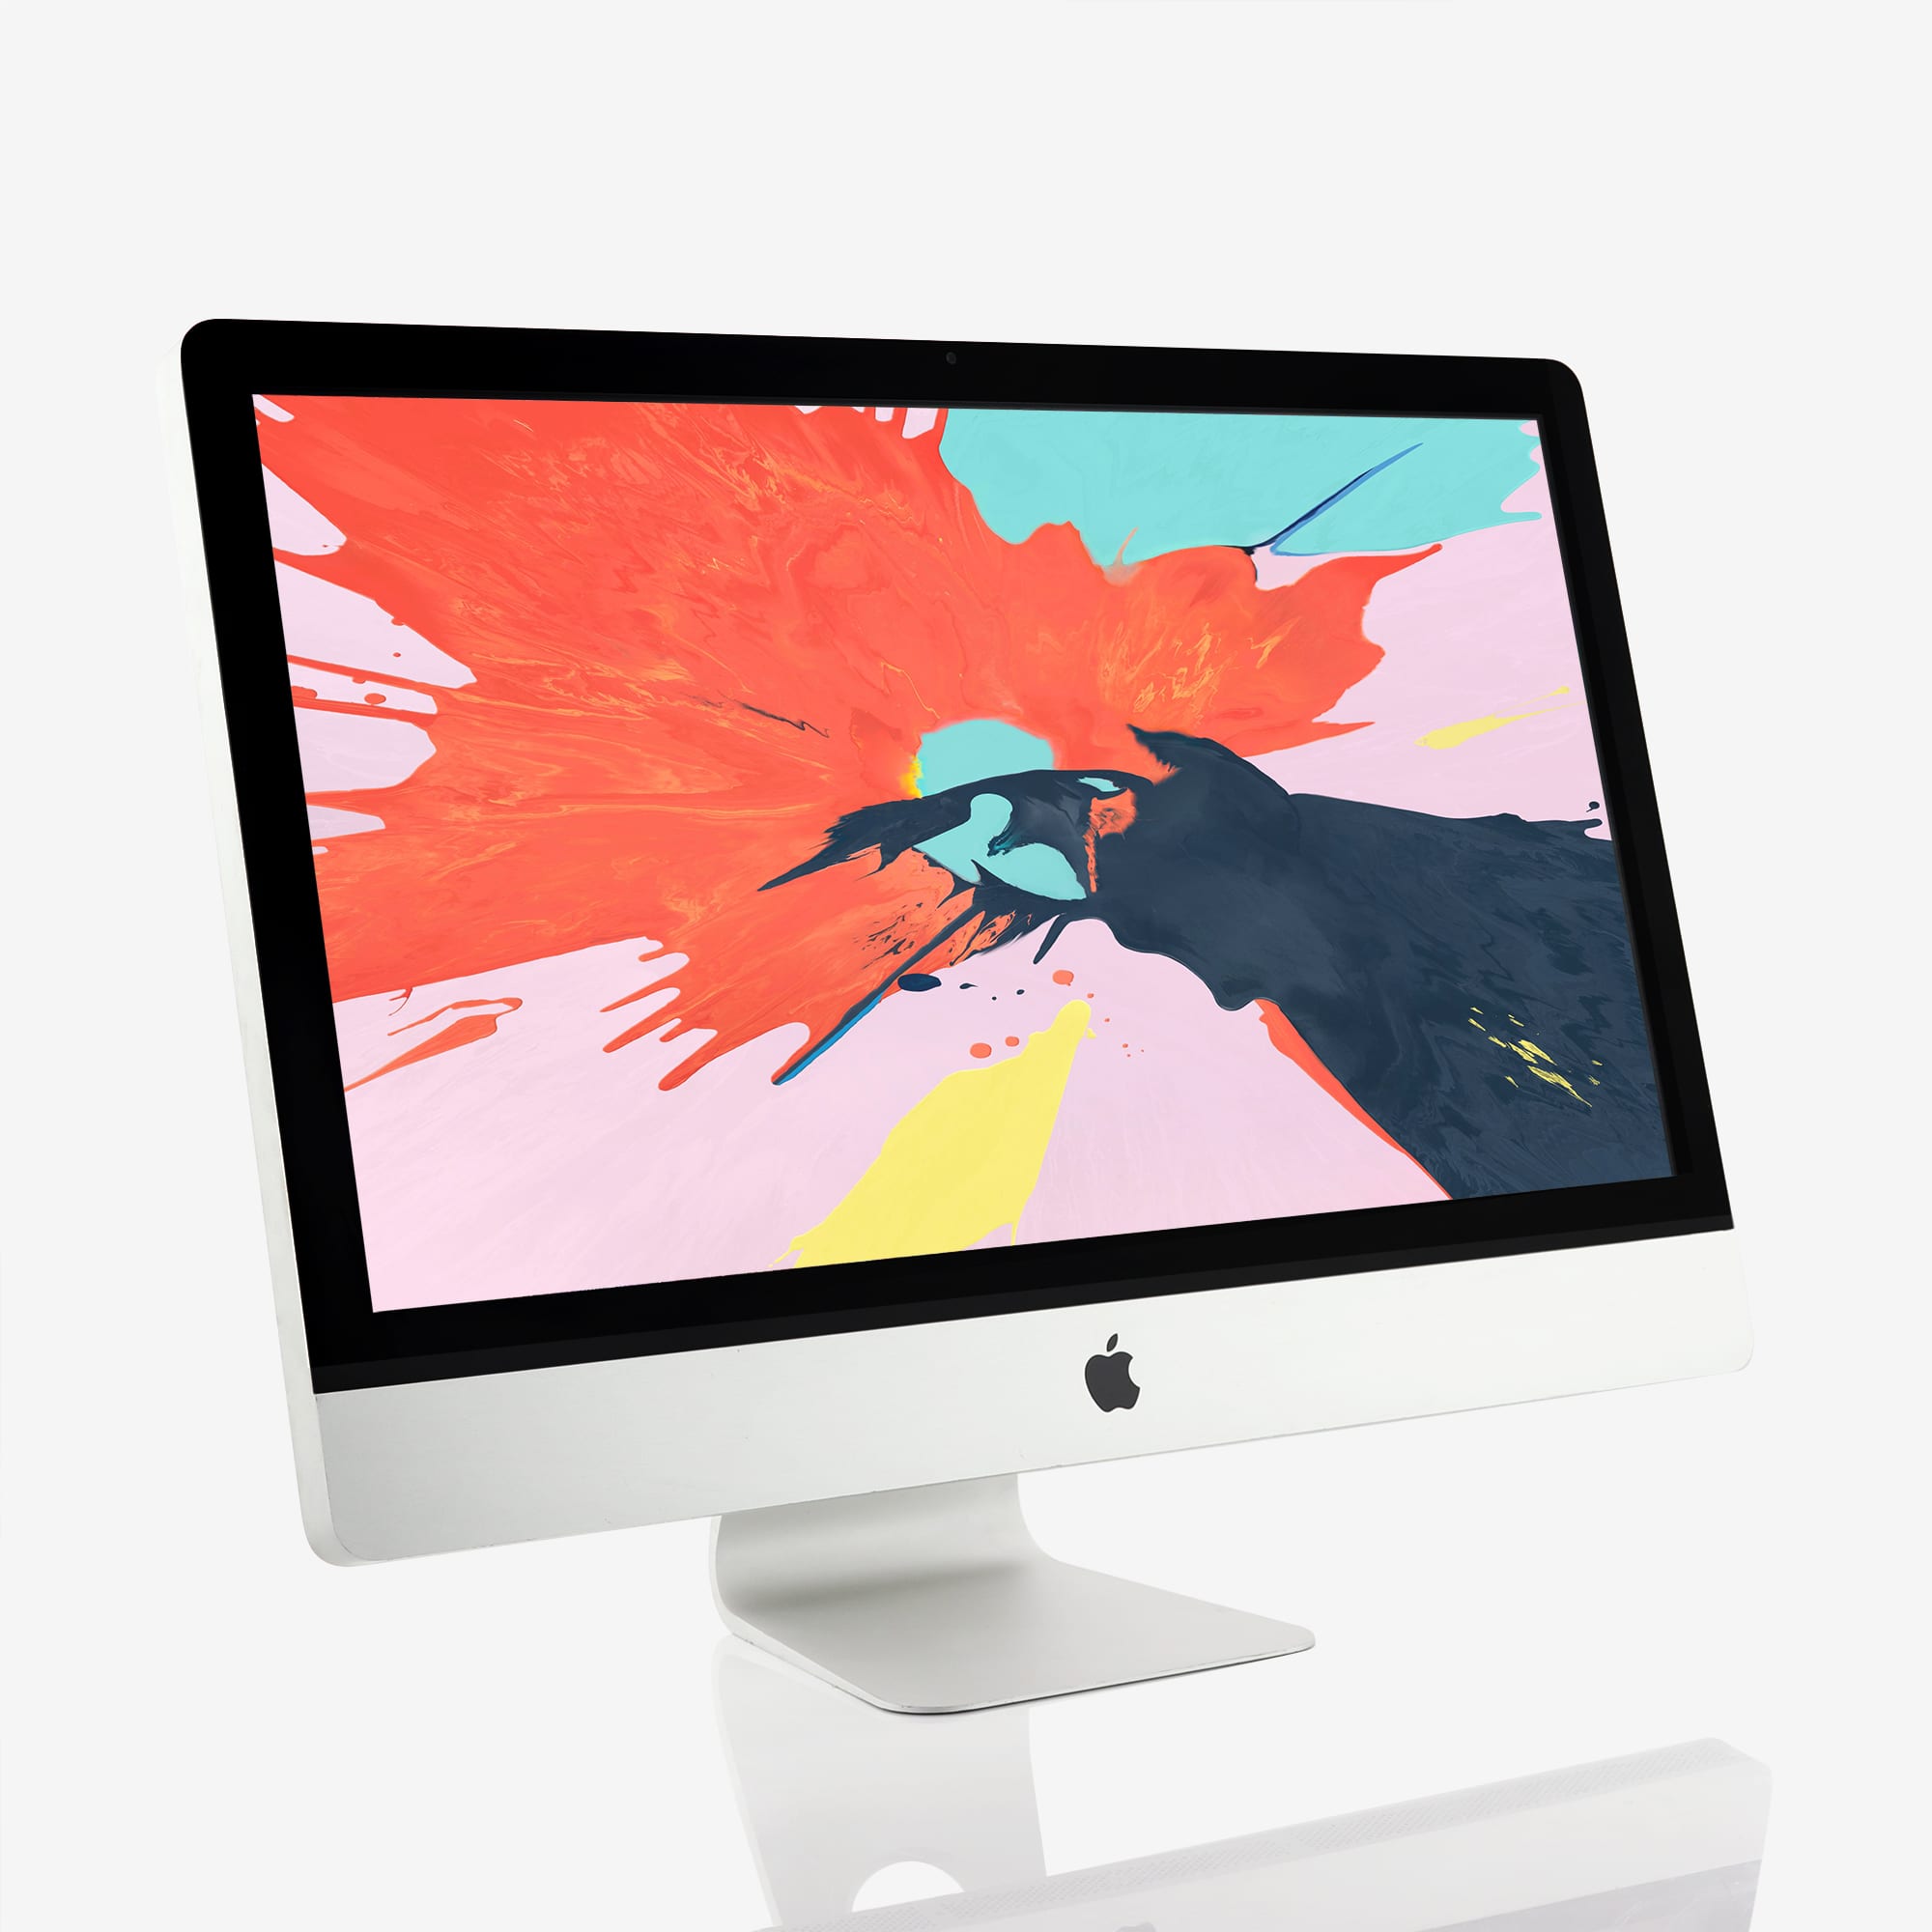 1 x Apple iMac 27 Inch Quad Core i7 3.40 GHz (2011)